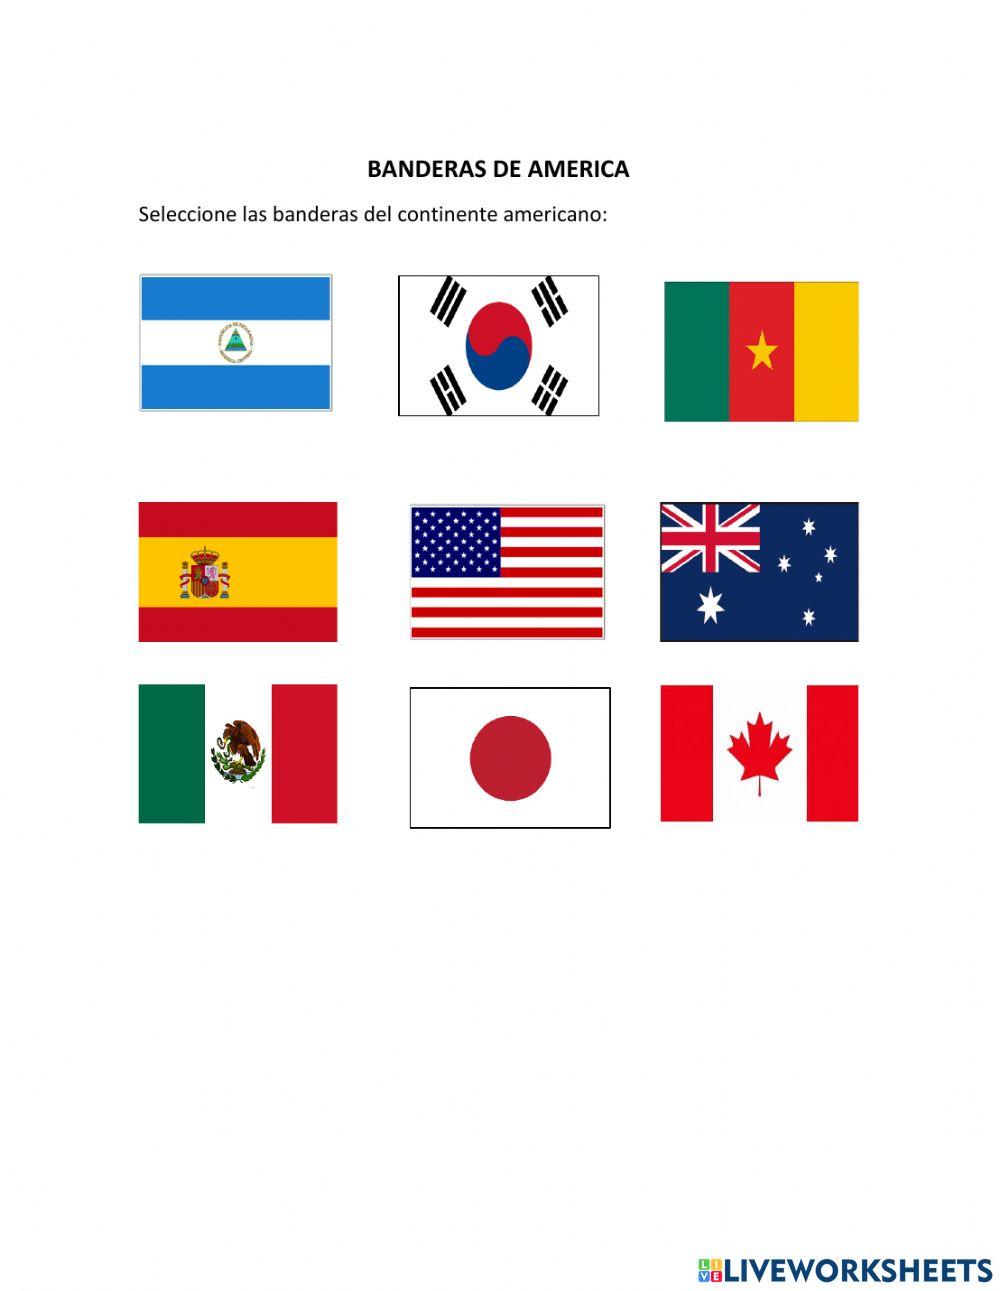 Banderas de America worksheet